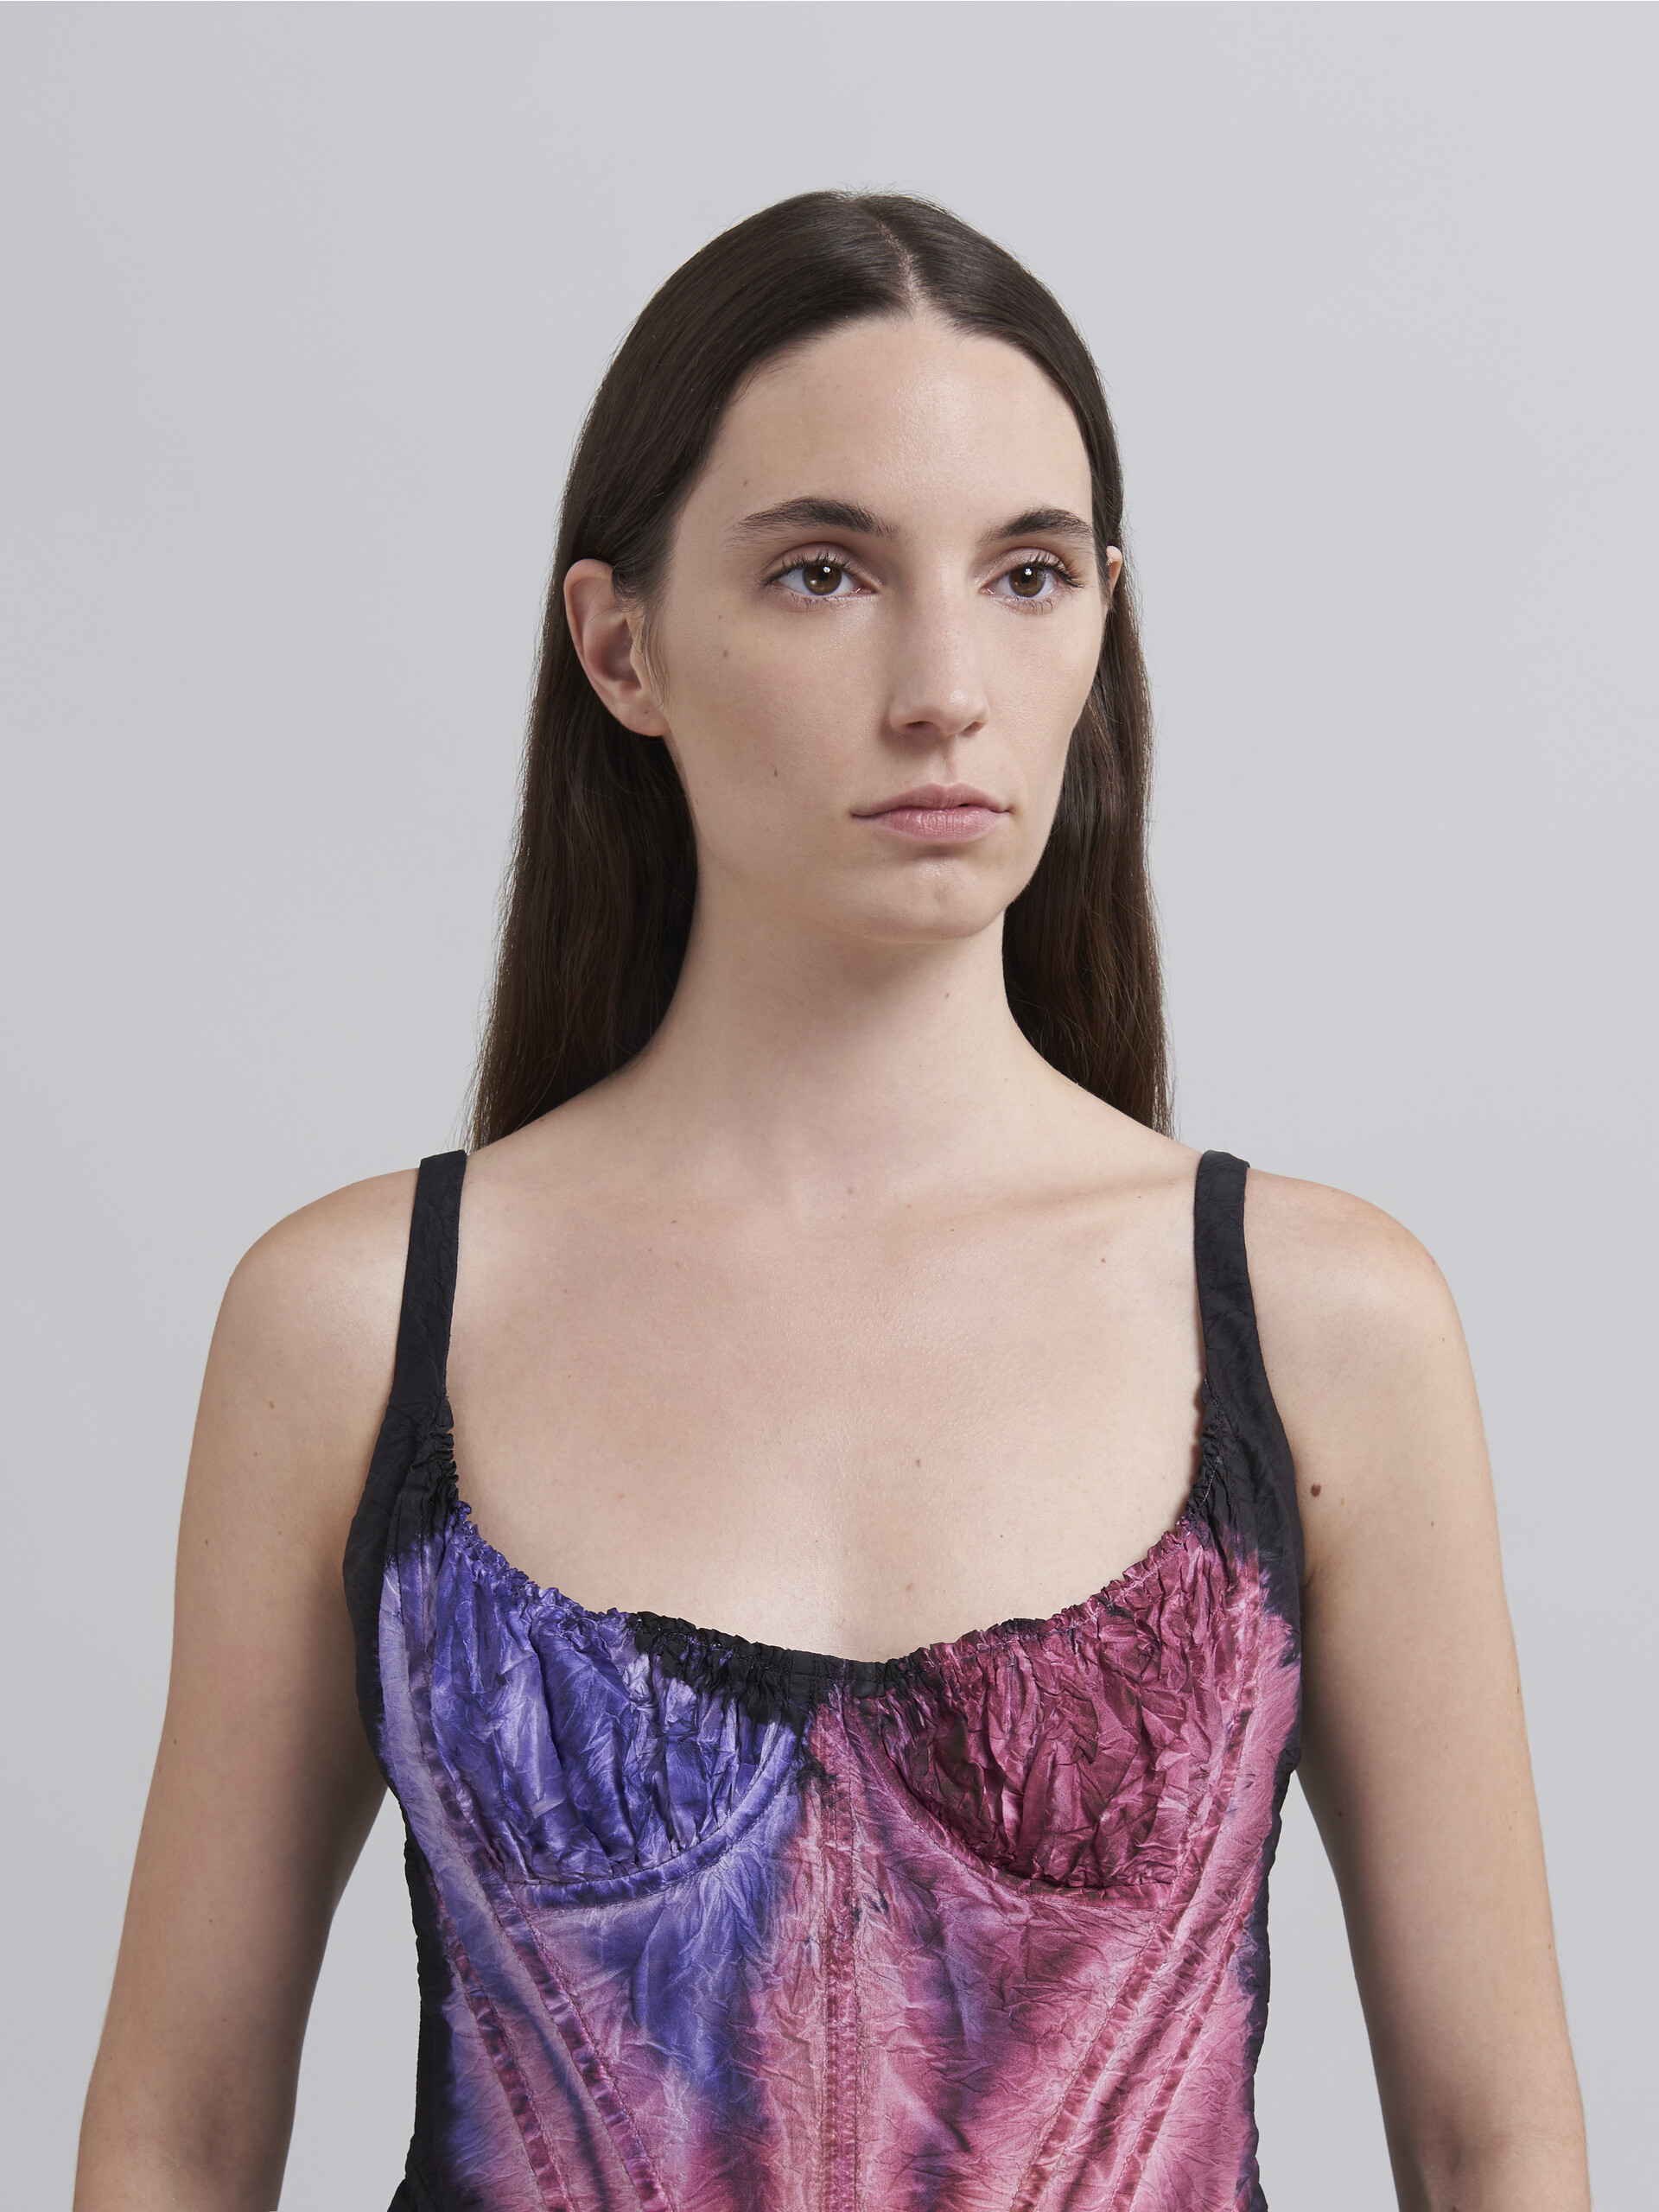 Vestido de tafetán de seda con teñido arco iris - Vestidos - Image 4